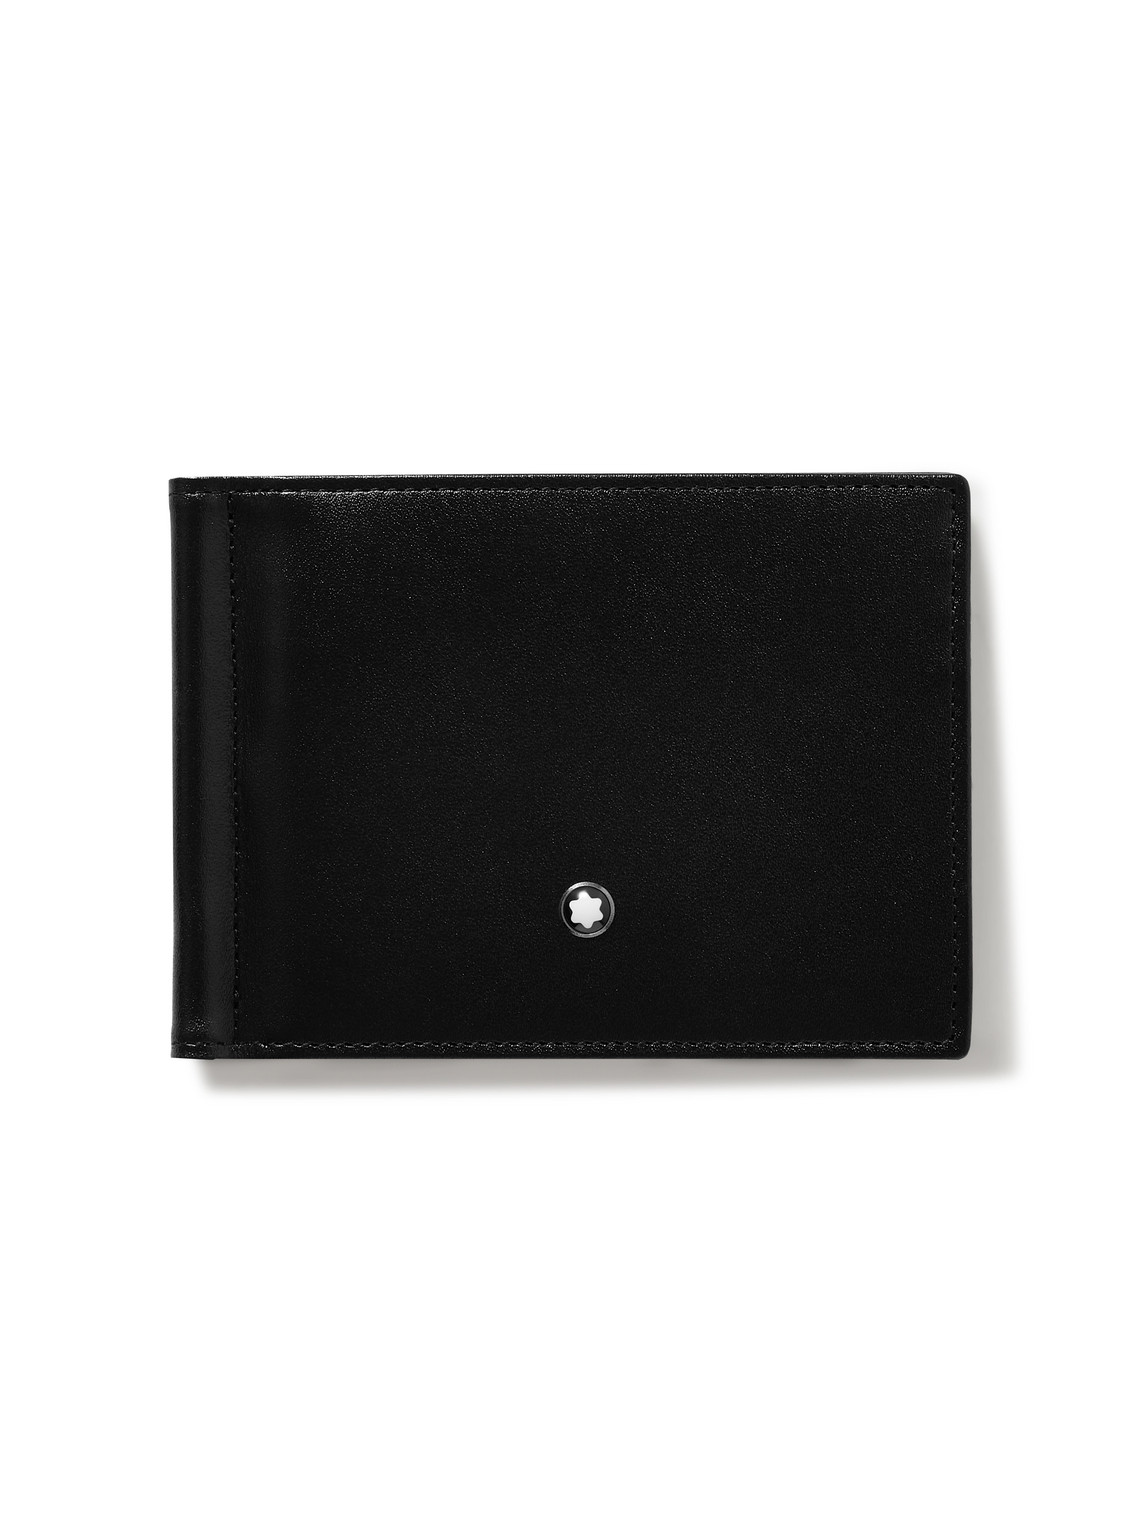 Montblanc Meisterstück Full-grain Leather Billfold Wallet With Money Clip In Black